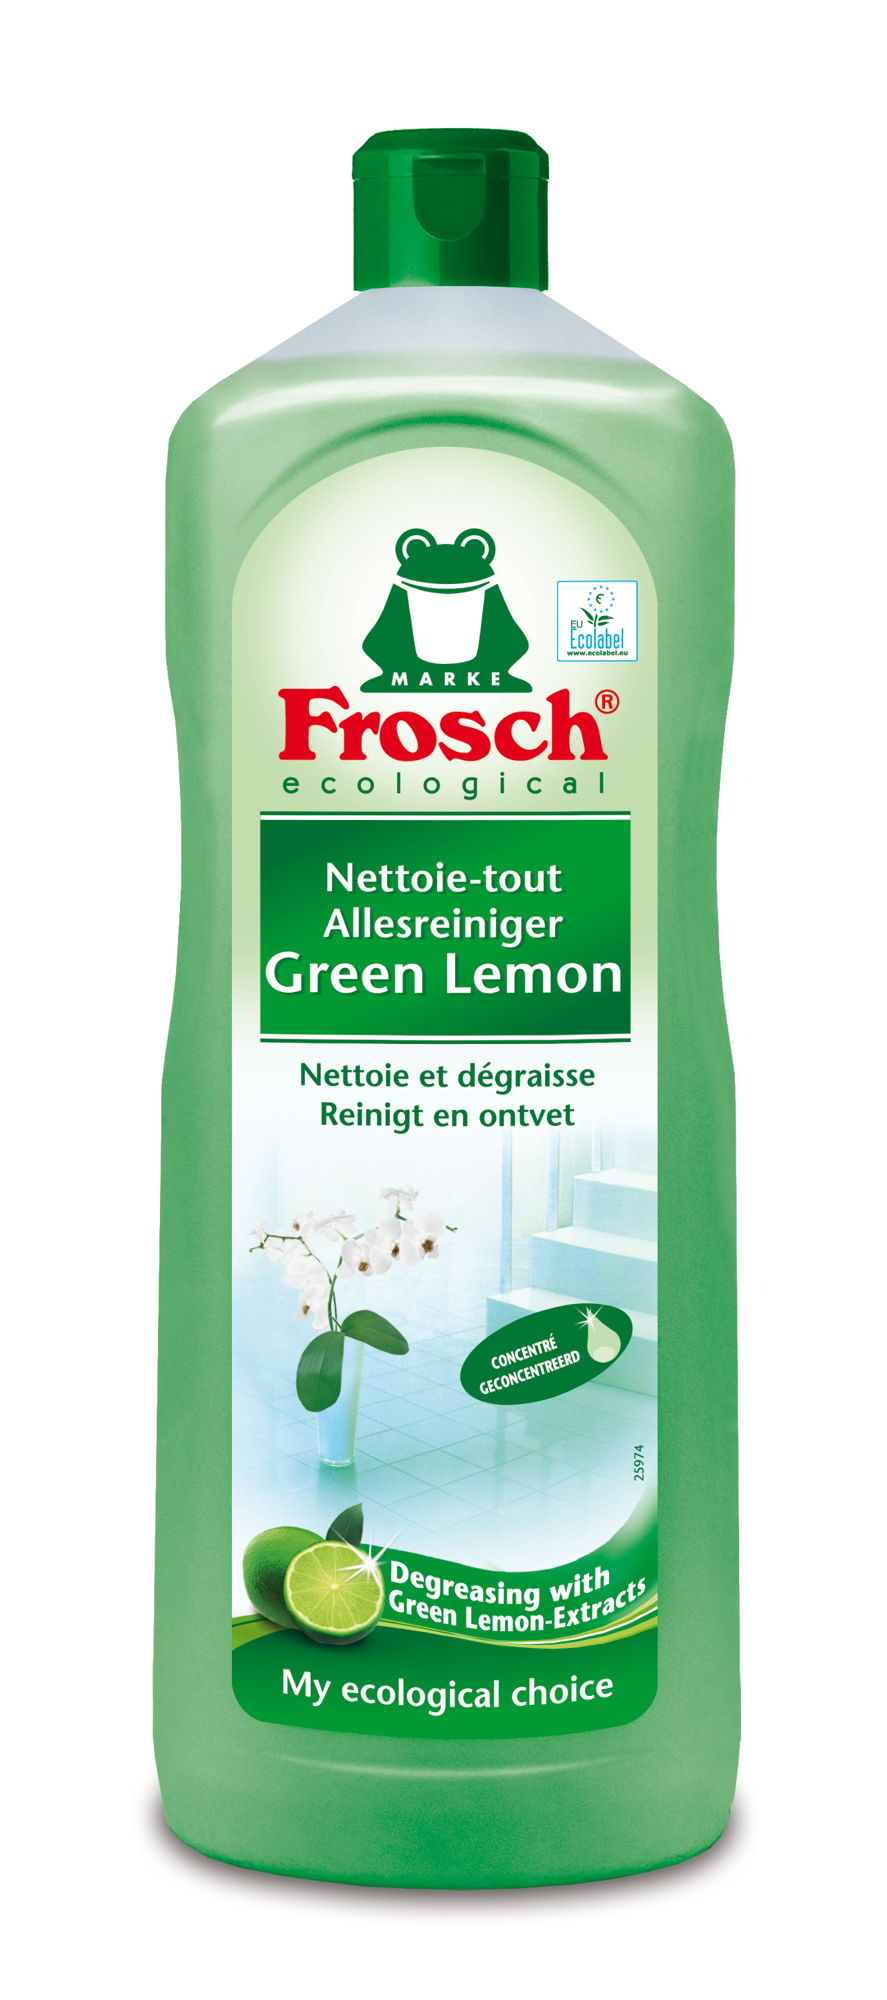 Nettoie-tout 
Green Lemon